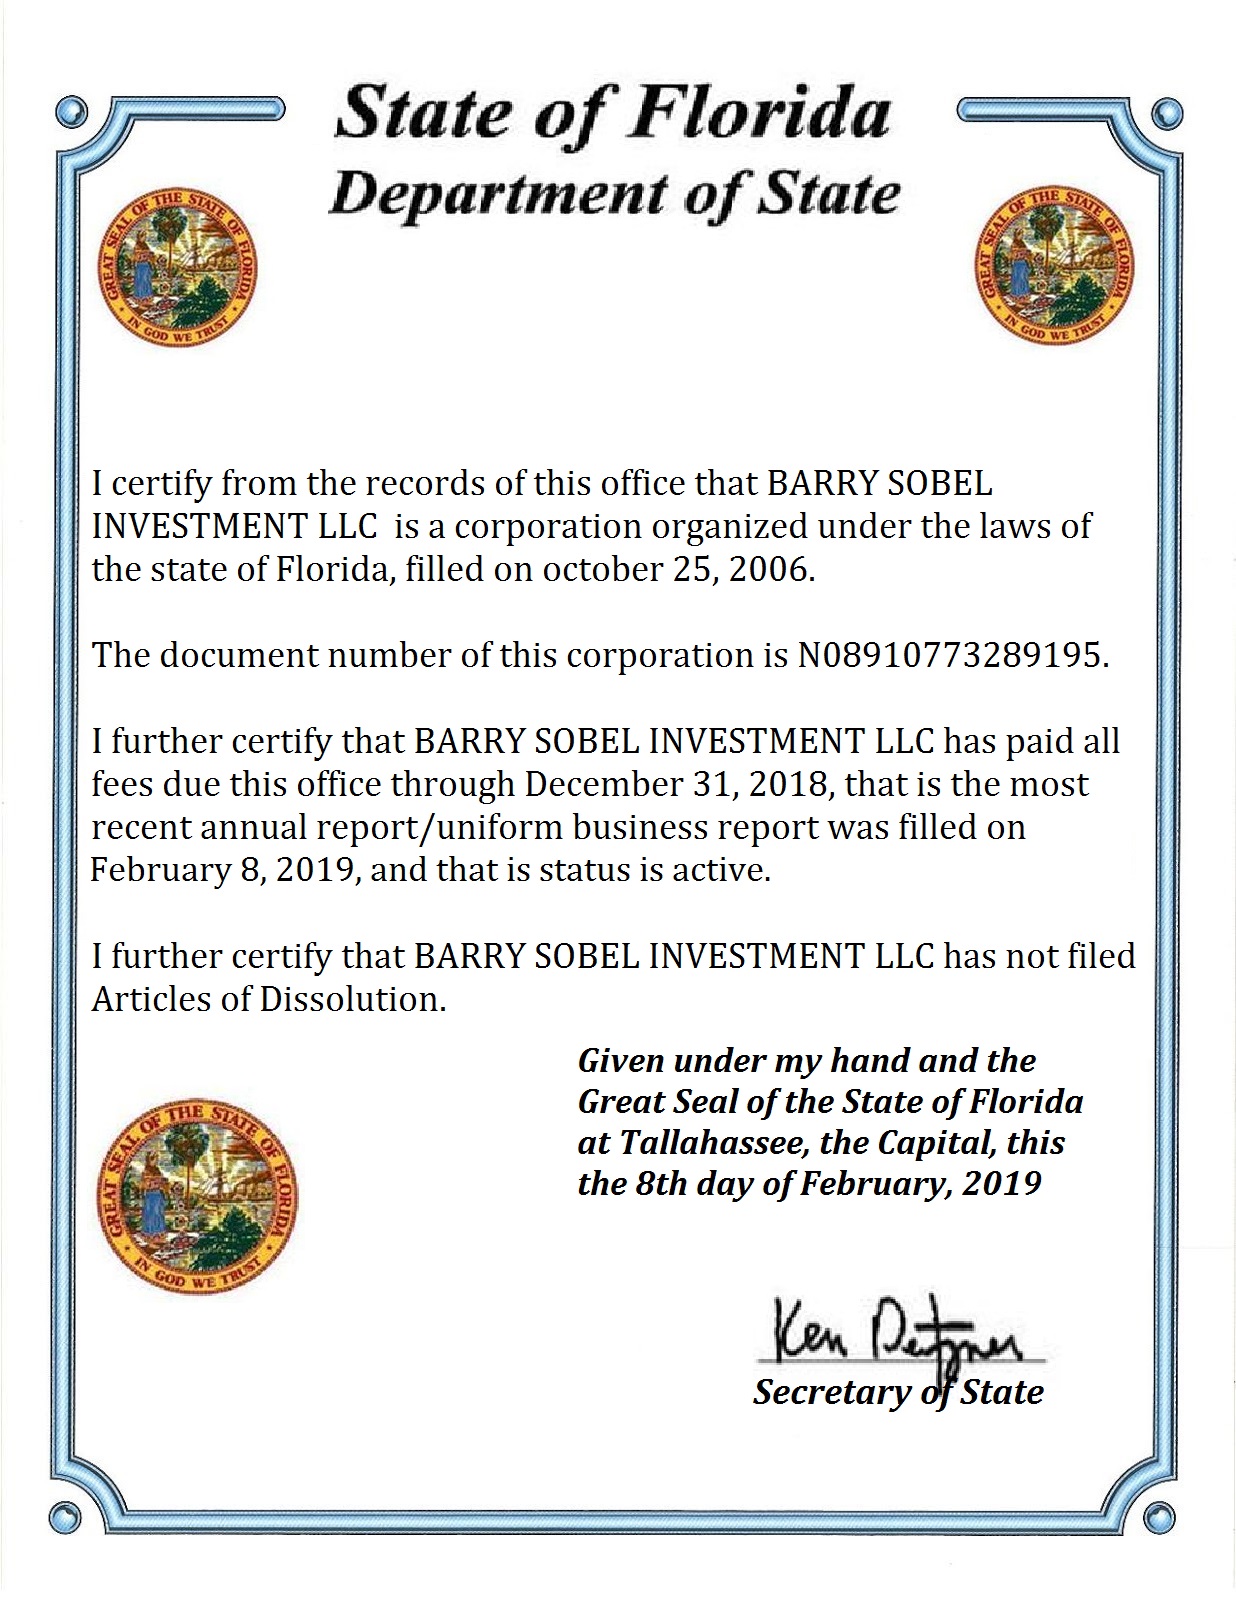 Business License in FL (Fake)